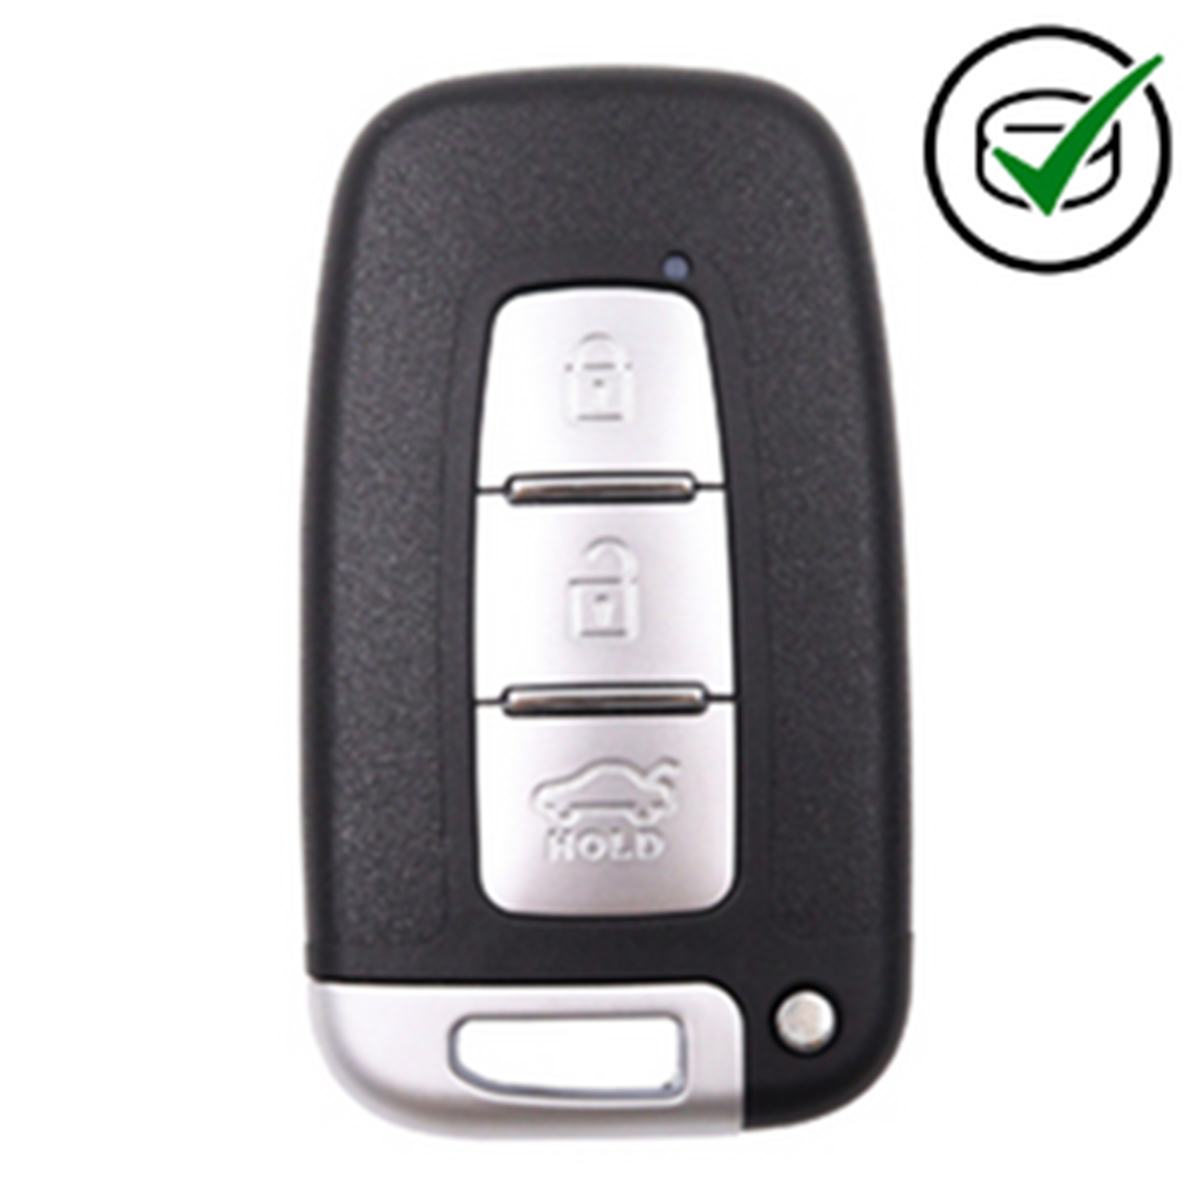 KeyDIY 3 Button Smart Key to suit ZB04-3